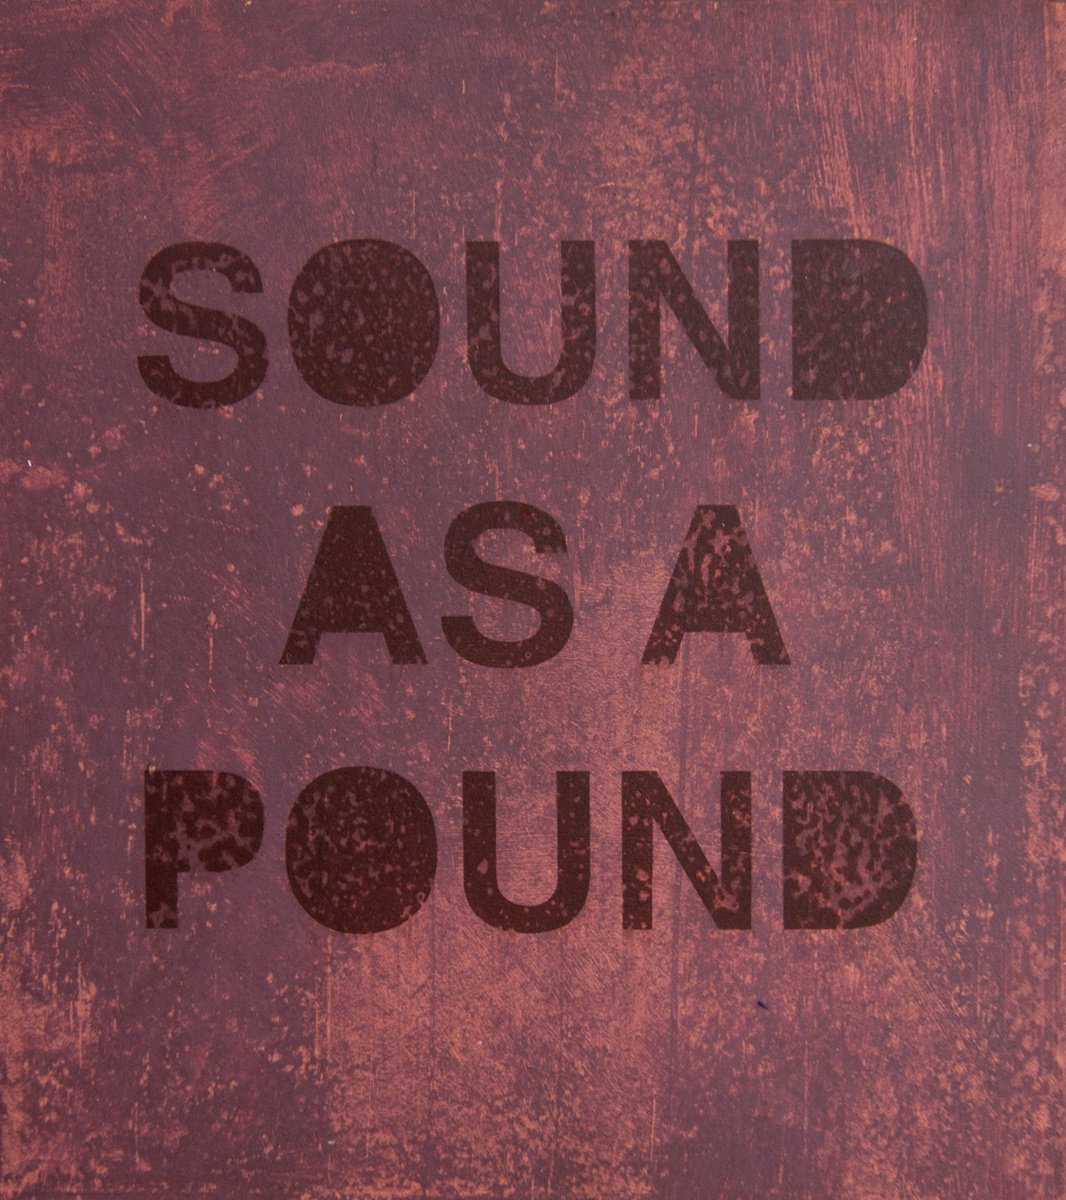 Sound as a Pound No 2 by Ian McKay